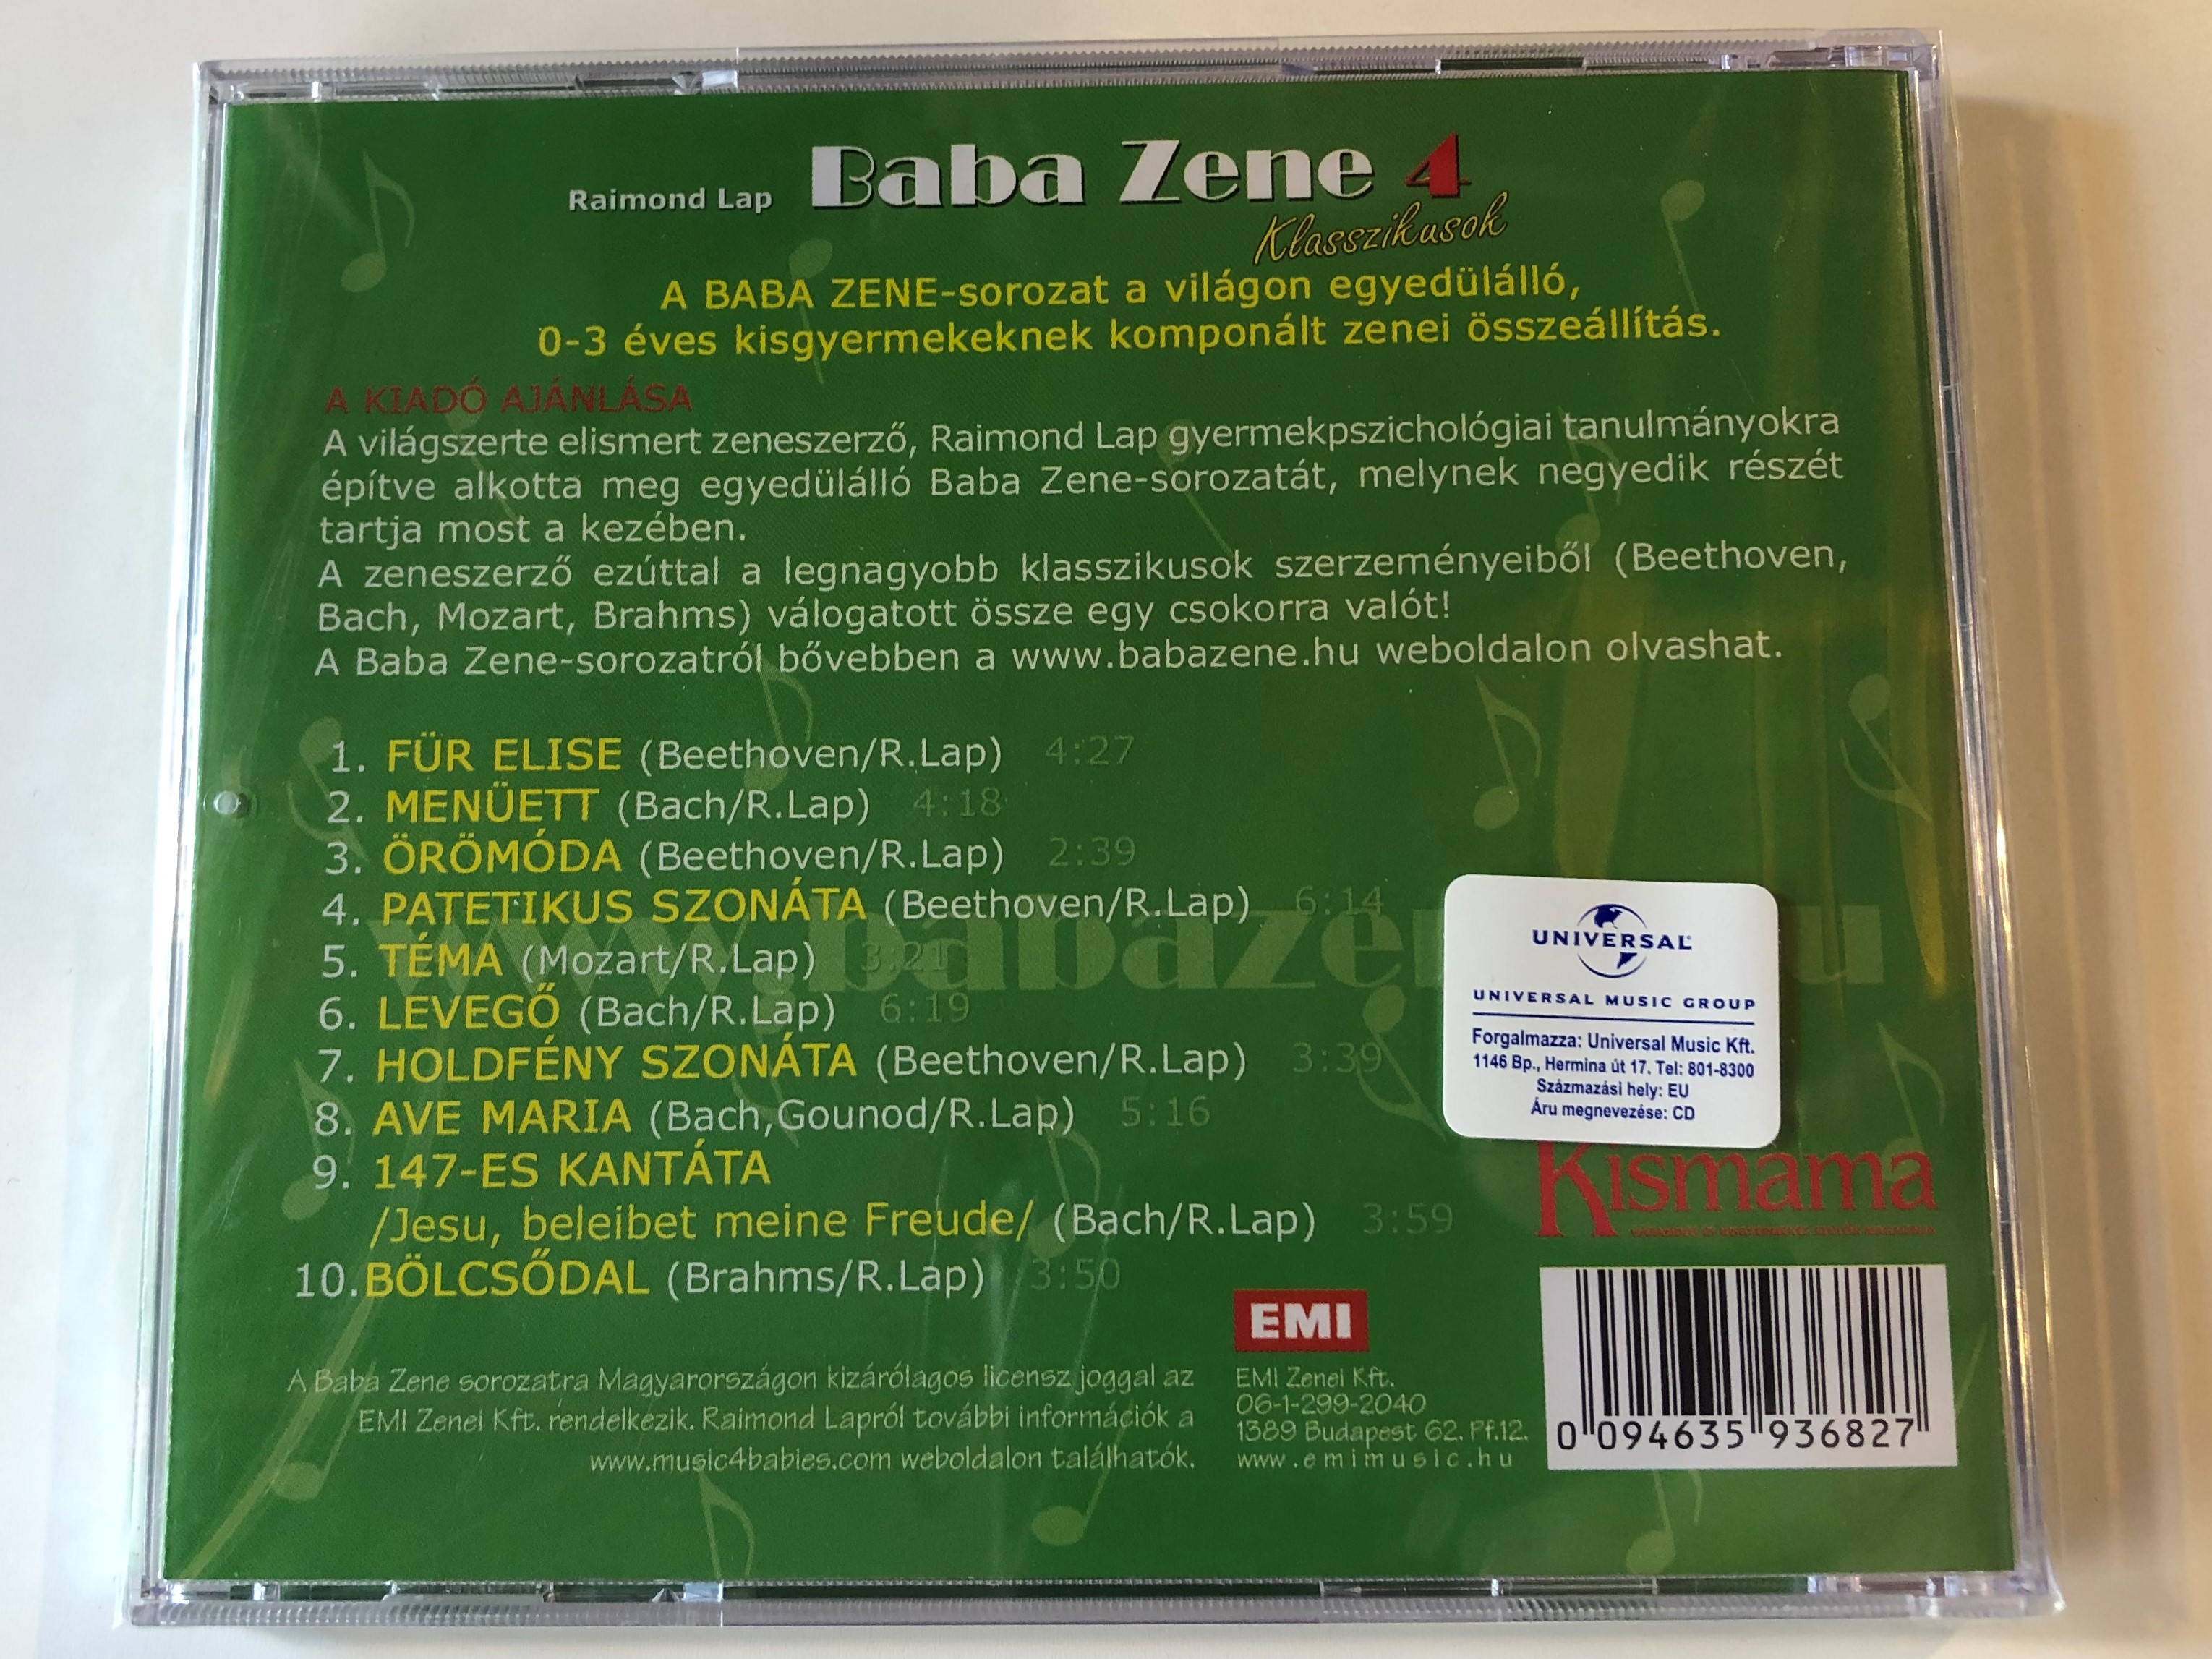 baba-zene-4.-raimond-lap-klasszikusok-emi-audio-cd-0094635936827-2-.jpg